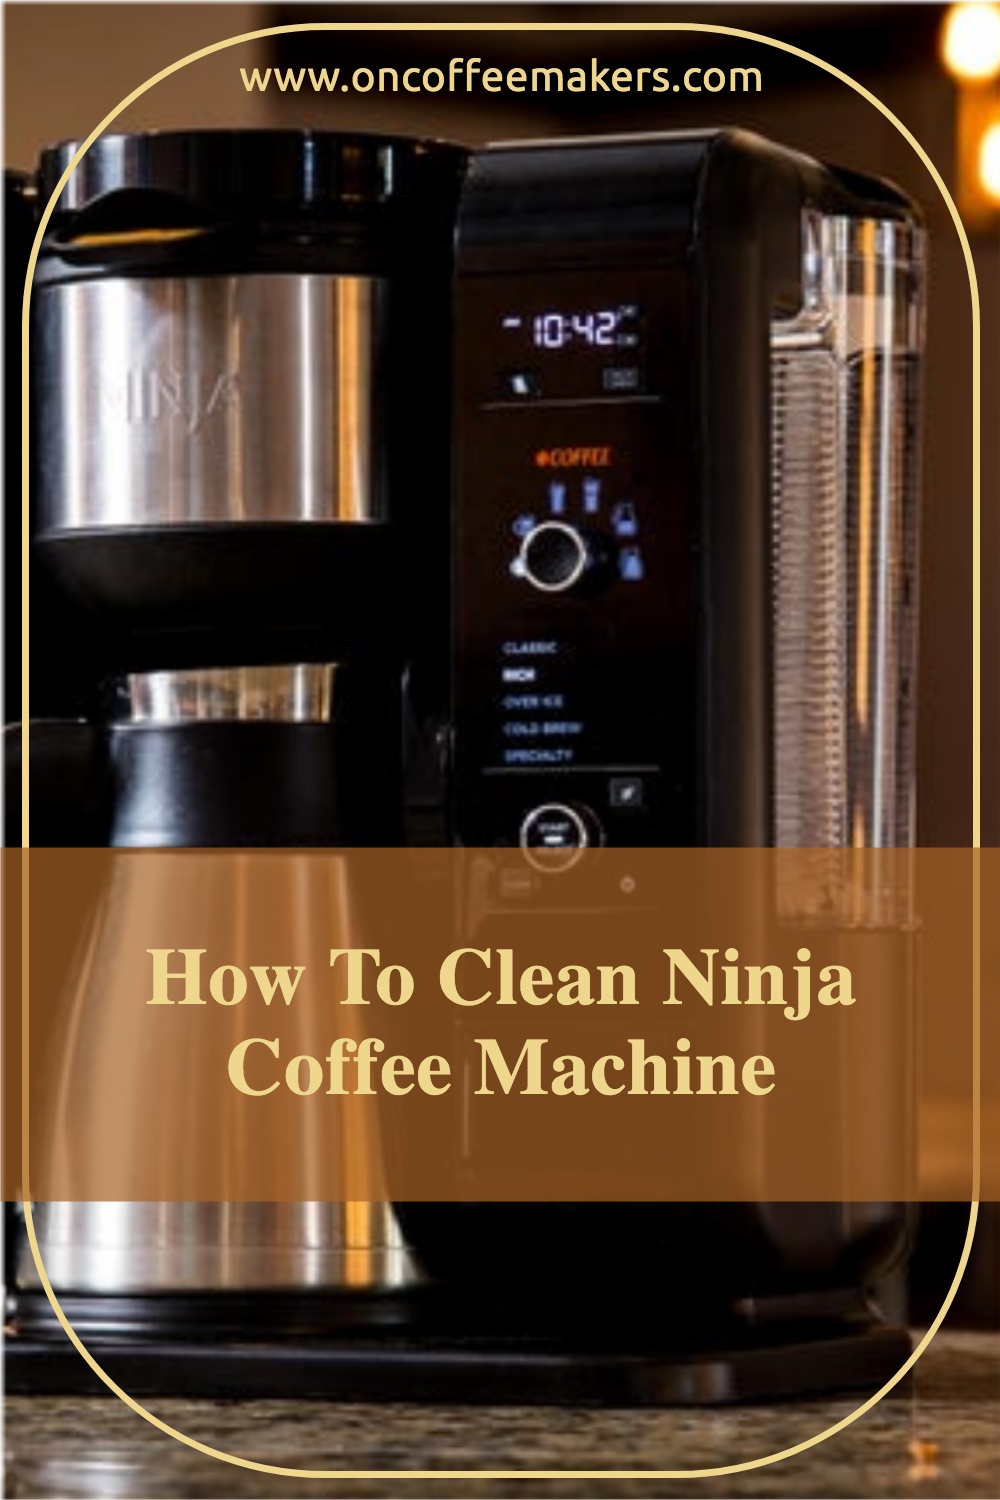 https://www.oncoffeemakers.com/images/How-To-Clean-Ninja-Coffee-Machine-2.jpg